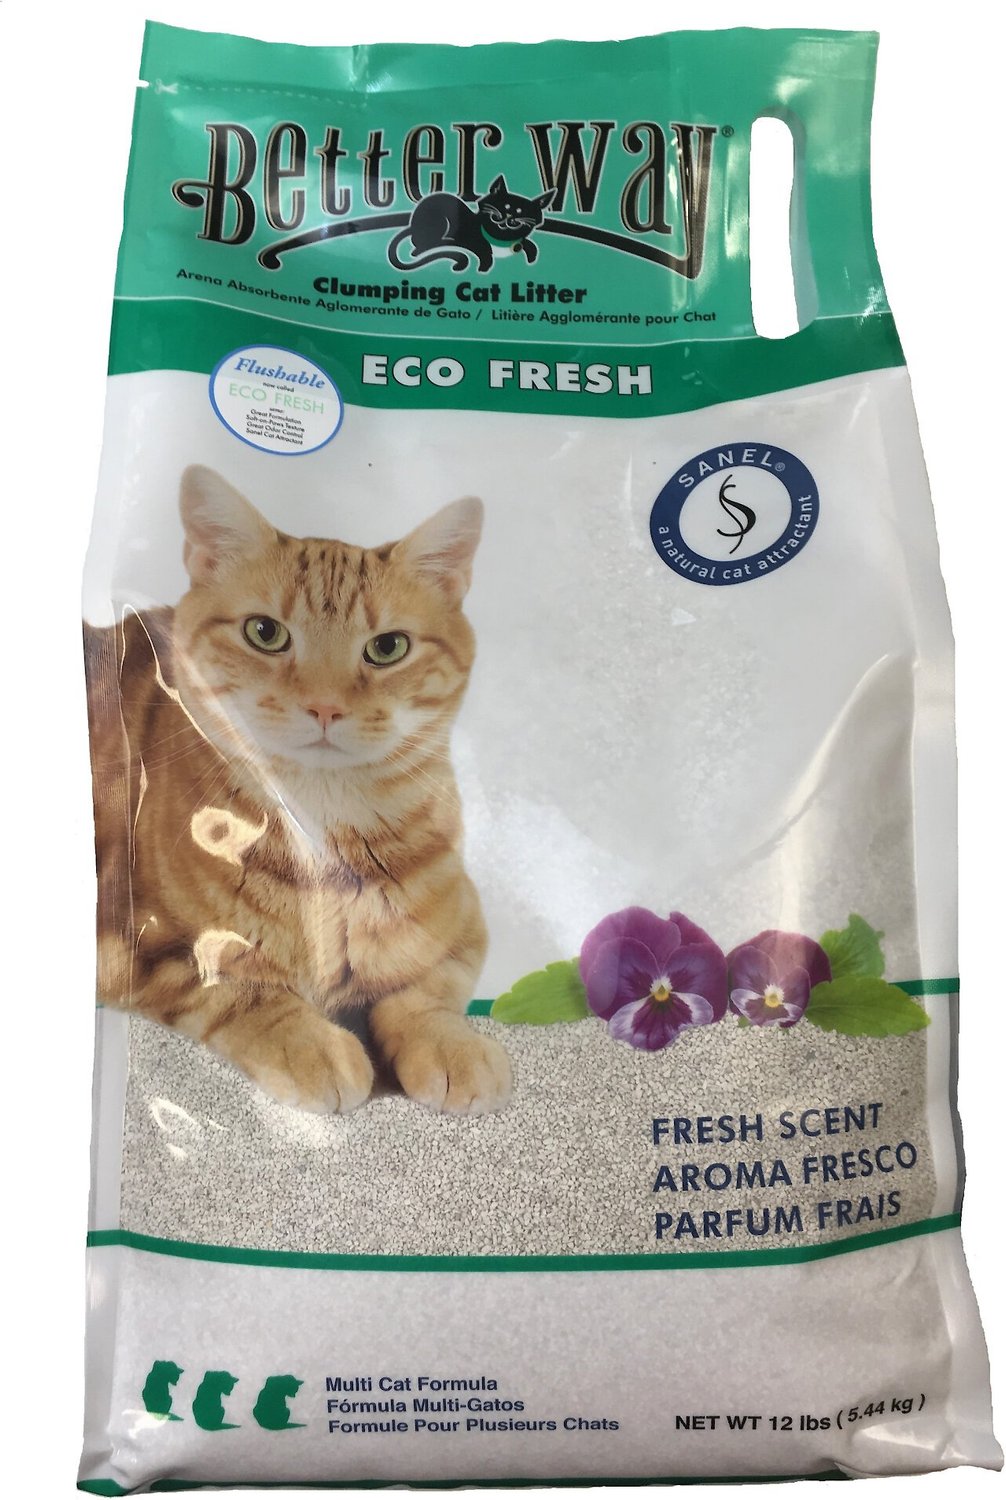 Better Way Eco Fresh Cat Litter, 12lb bag